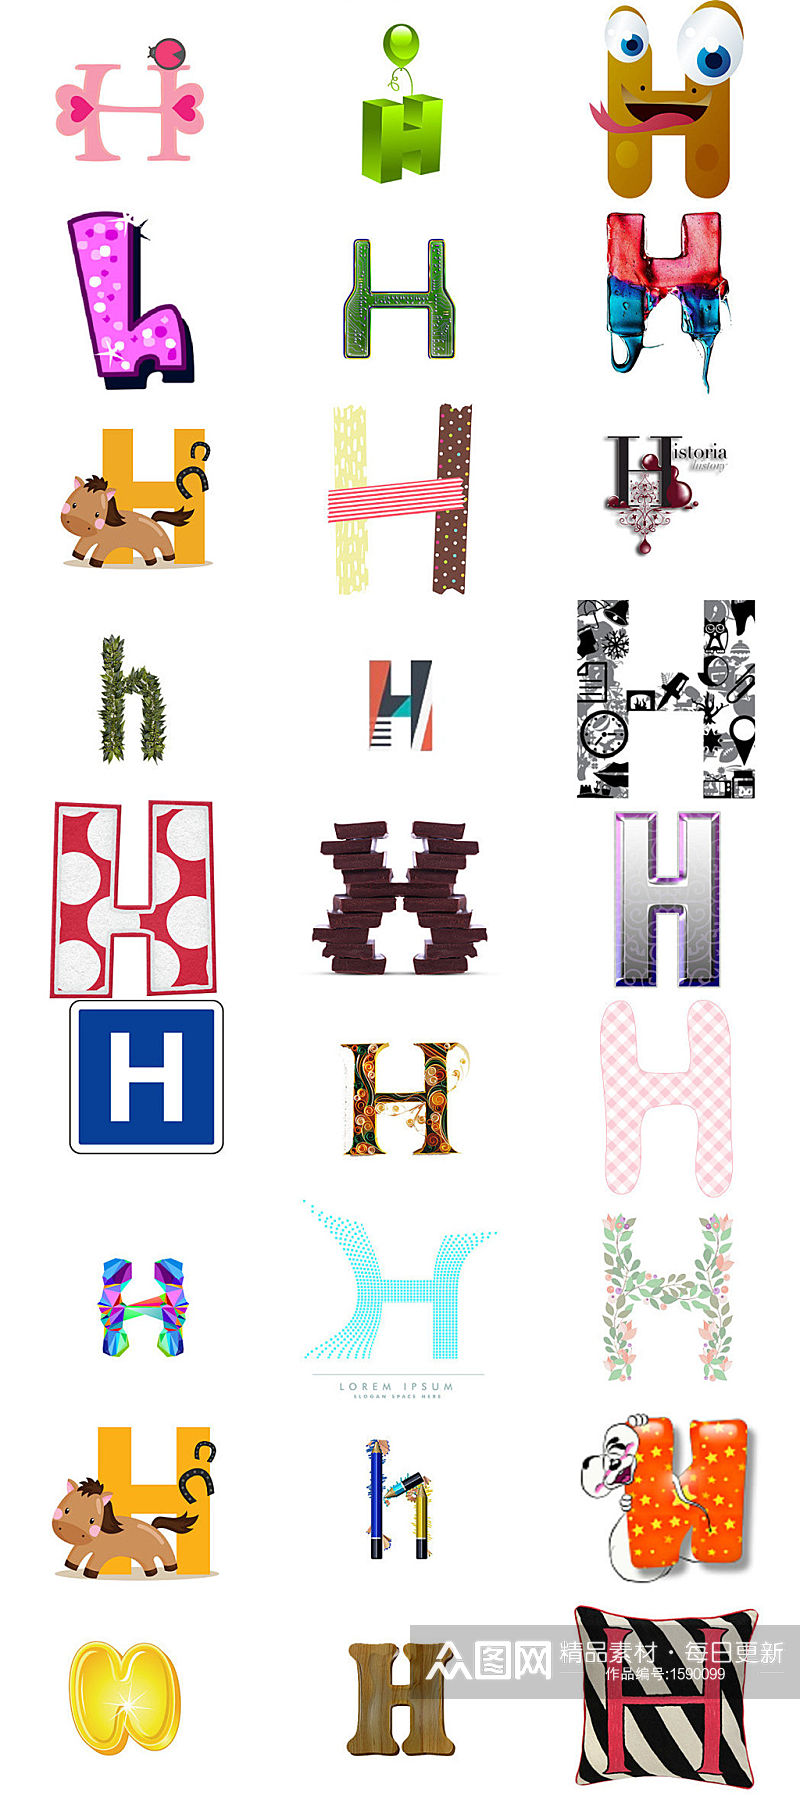 ps英文字母H艺术字体设计素材